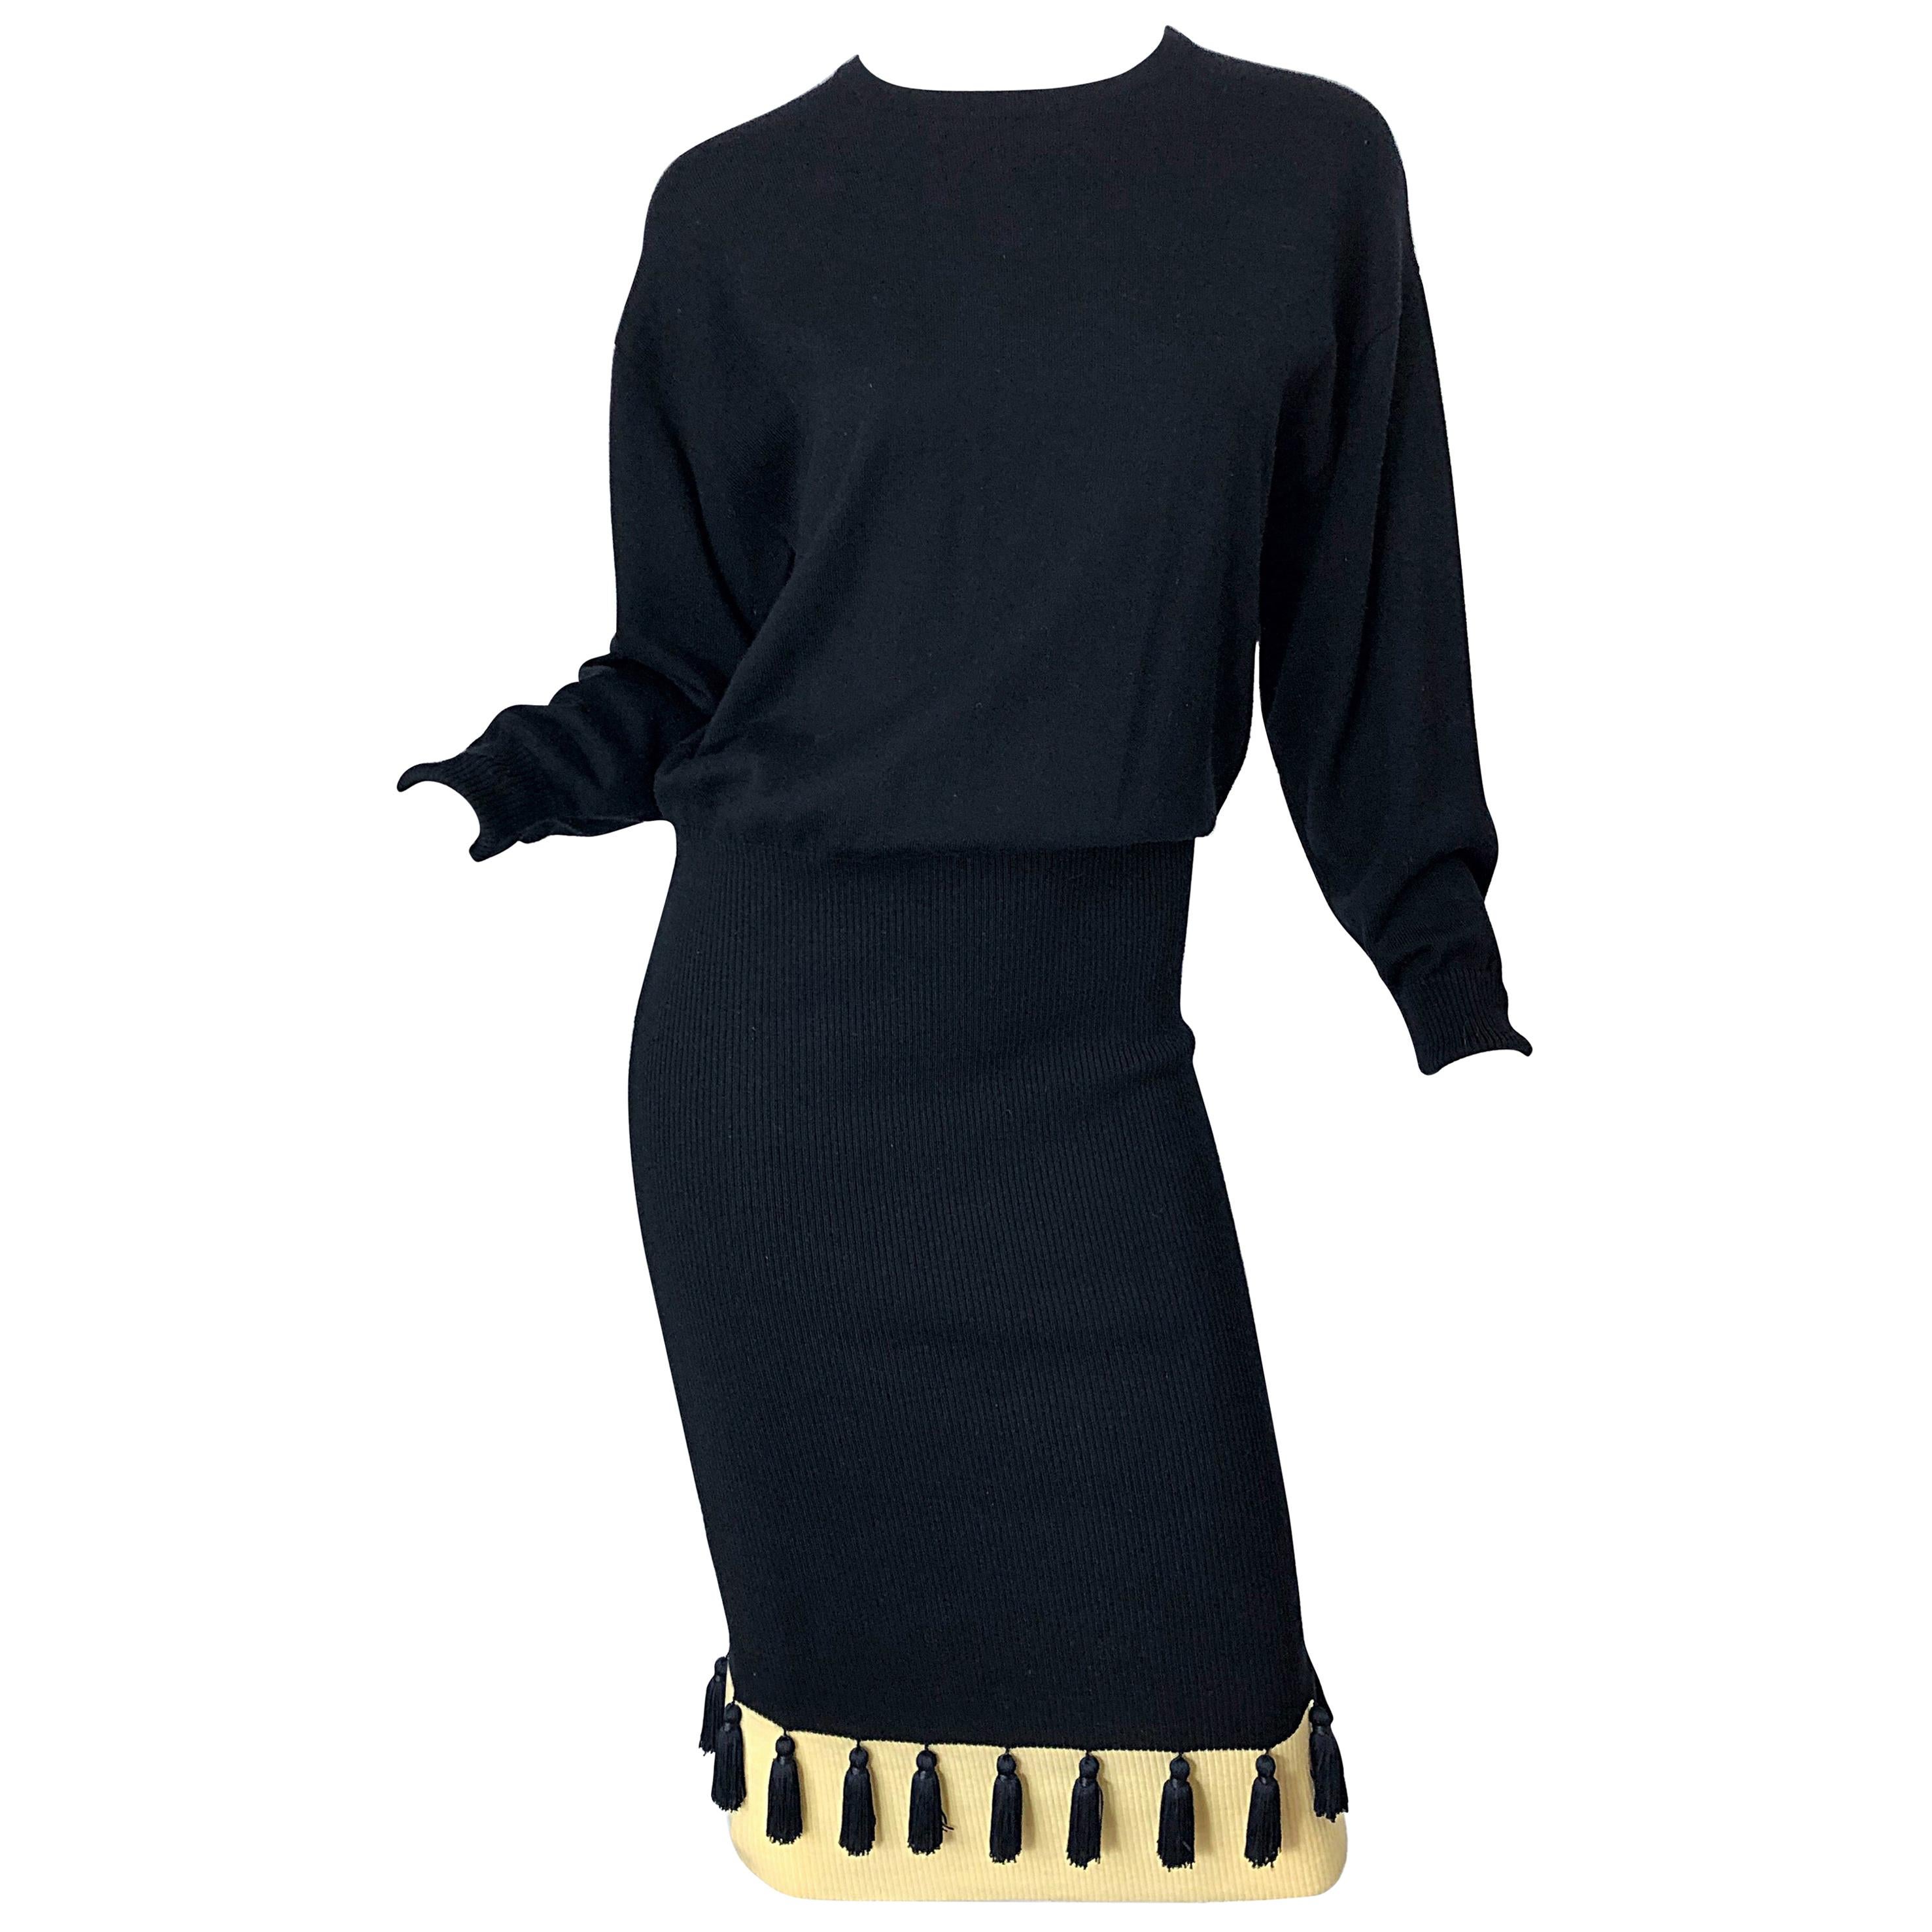 1980s Angelo Tarlazzi Black and Ivory Wool Dolman Sleeve 80s Sweater Dress